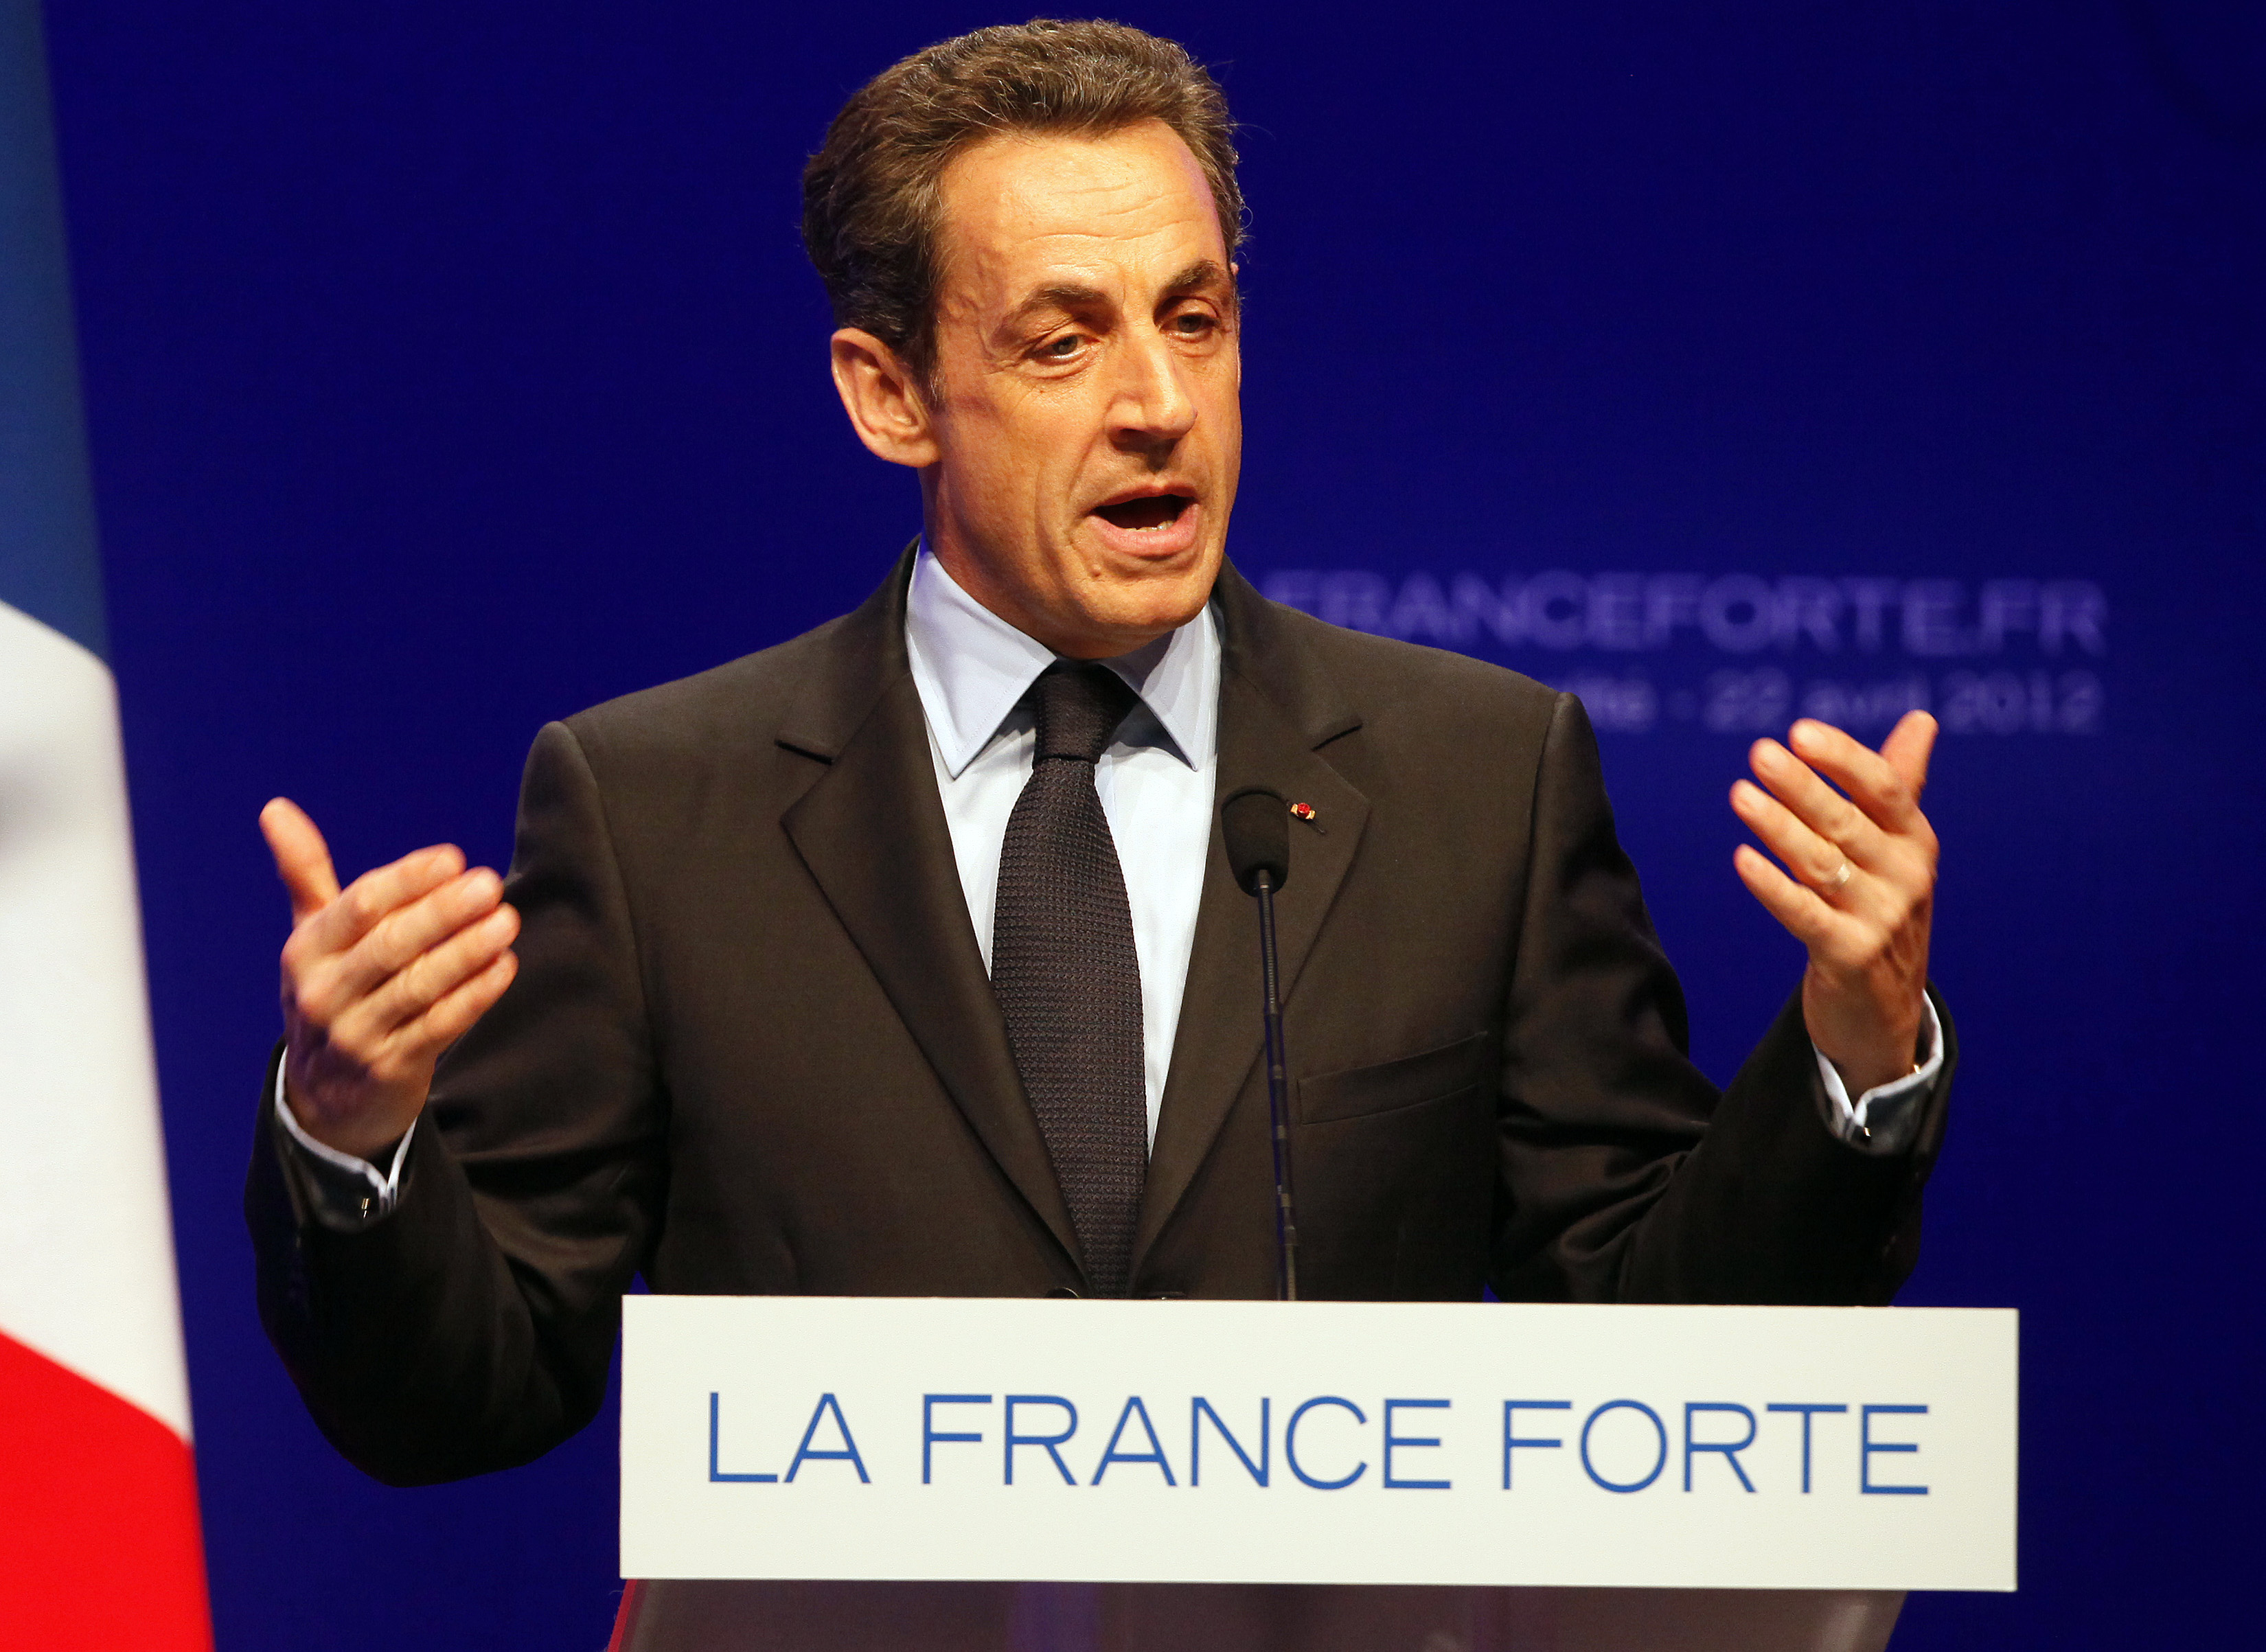 Nicolas Sarkozy, Val, François Hollande, Le Pen, Front National, Presidentvalet, Islamofobi, Marine Le Pen, Brott och straff, Politik, Frankrike